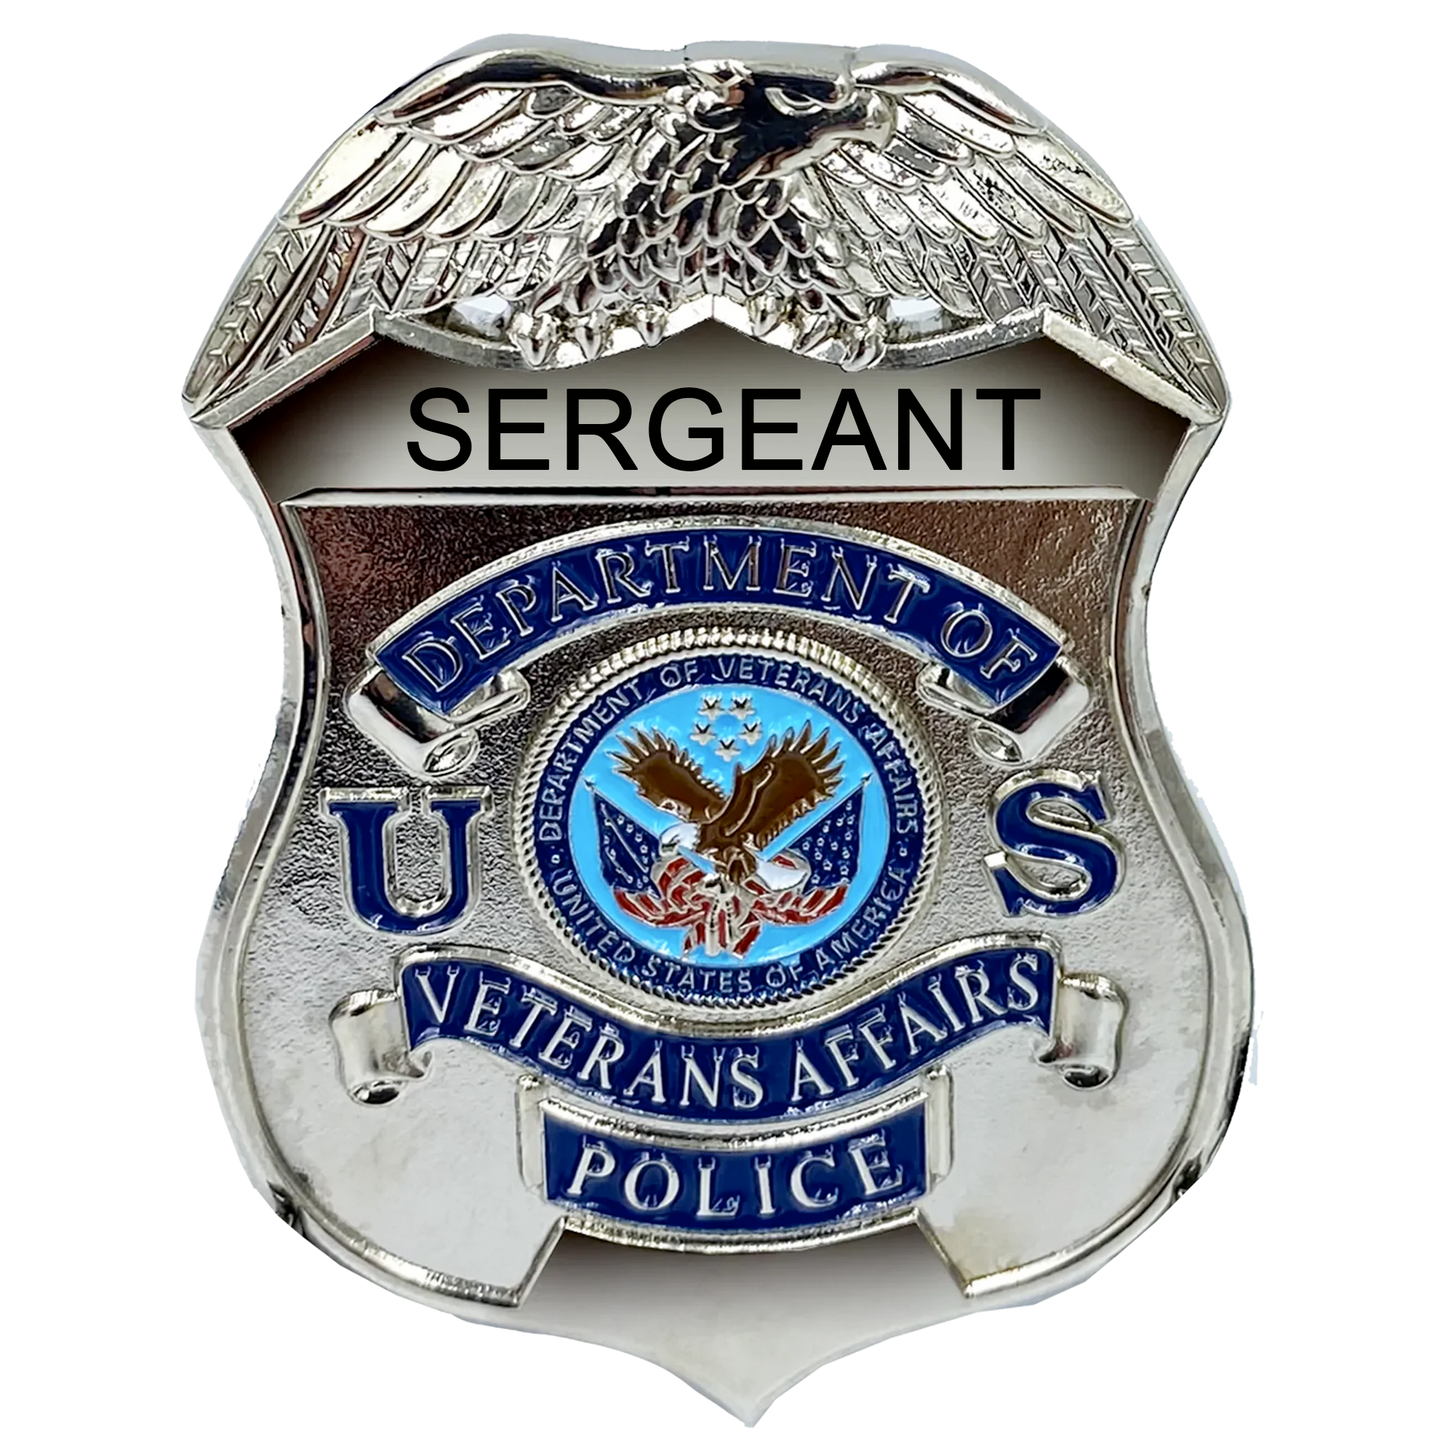 PBX-004-G VA Veterans Affairs Administration lapel pin for SERGEANT Police Officer